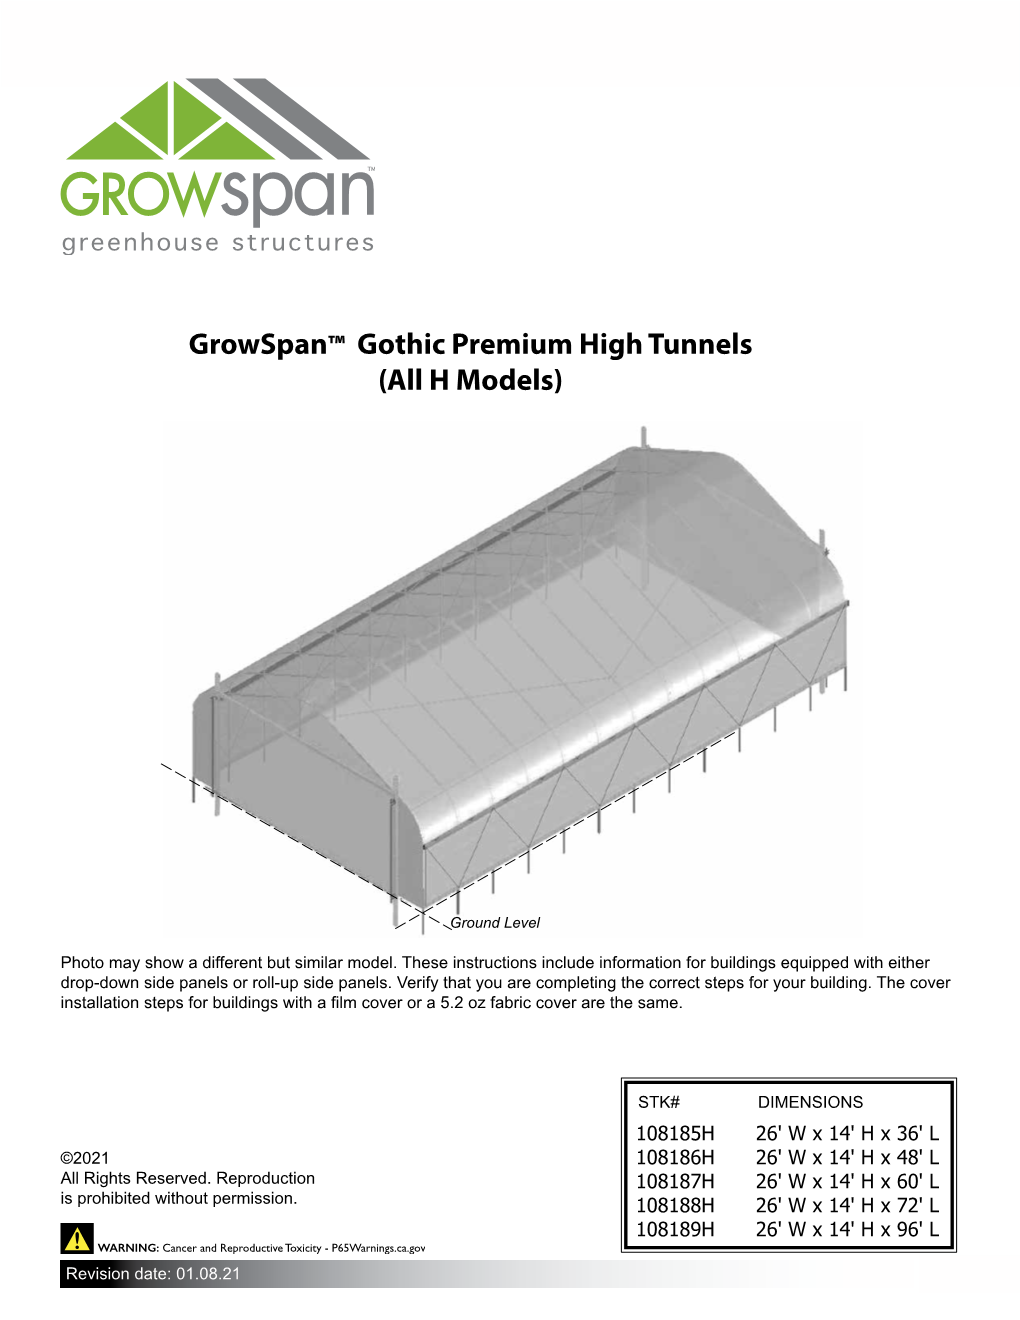 Growspan™ Gothic Premium High Tunnels (All H Models)